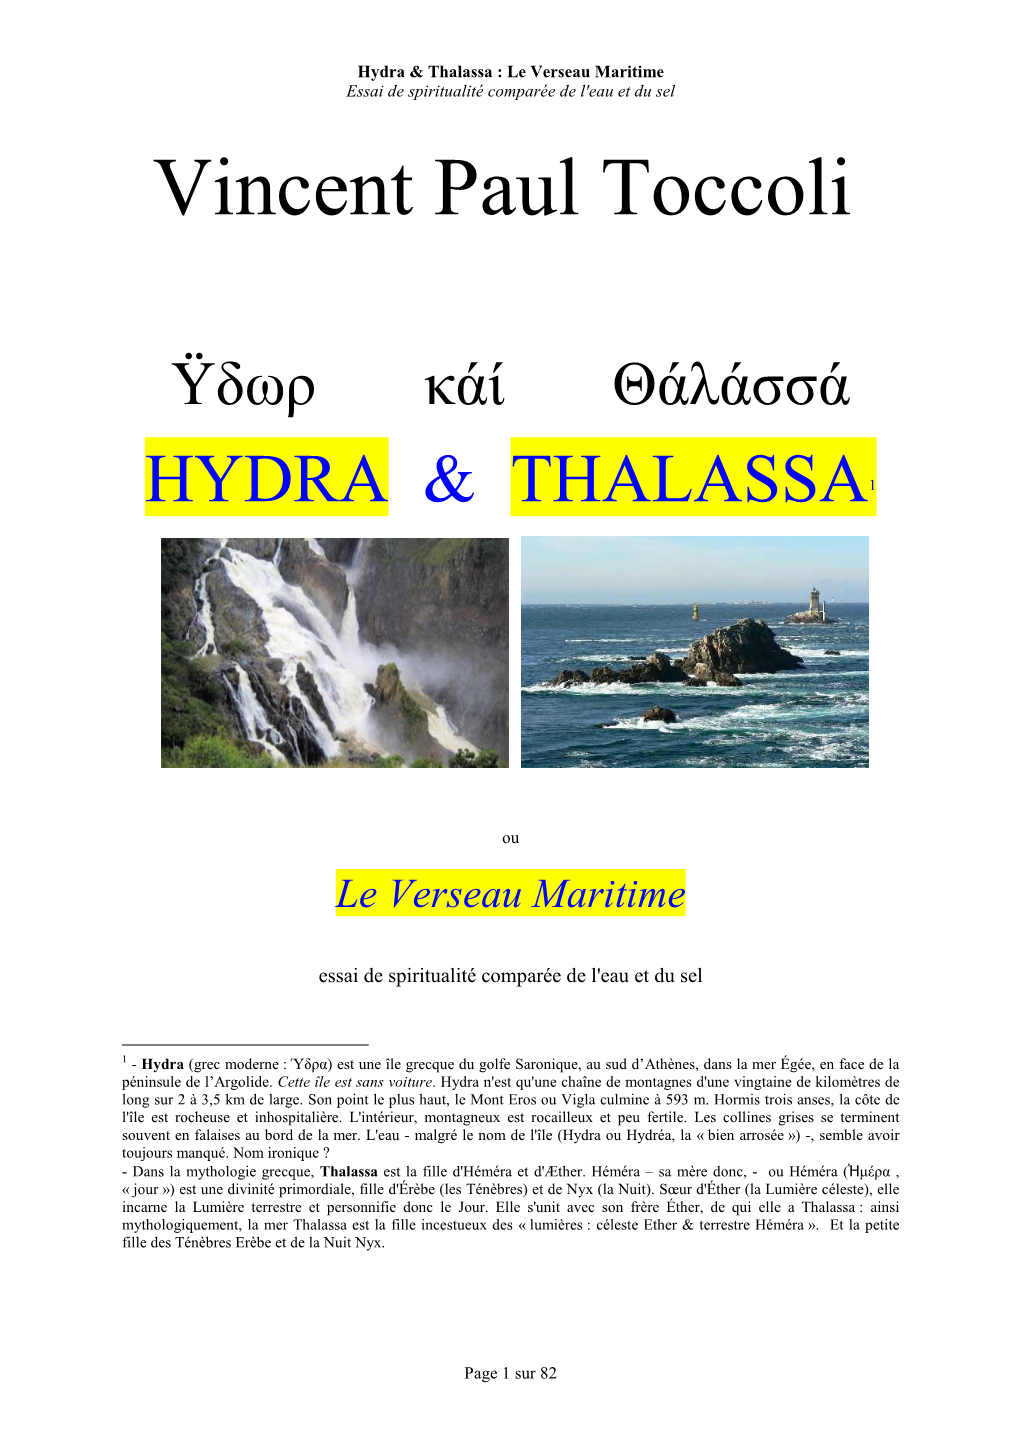 Hydra & Thalassa Le Verseau Maritime